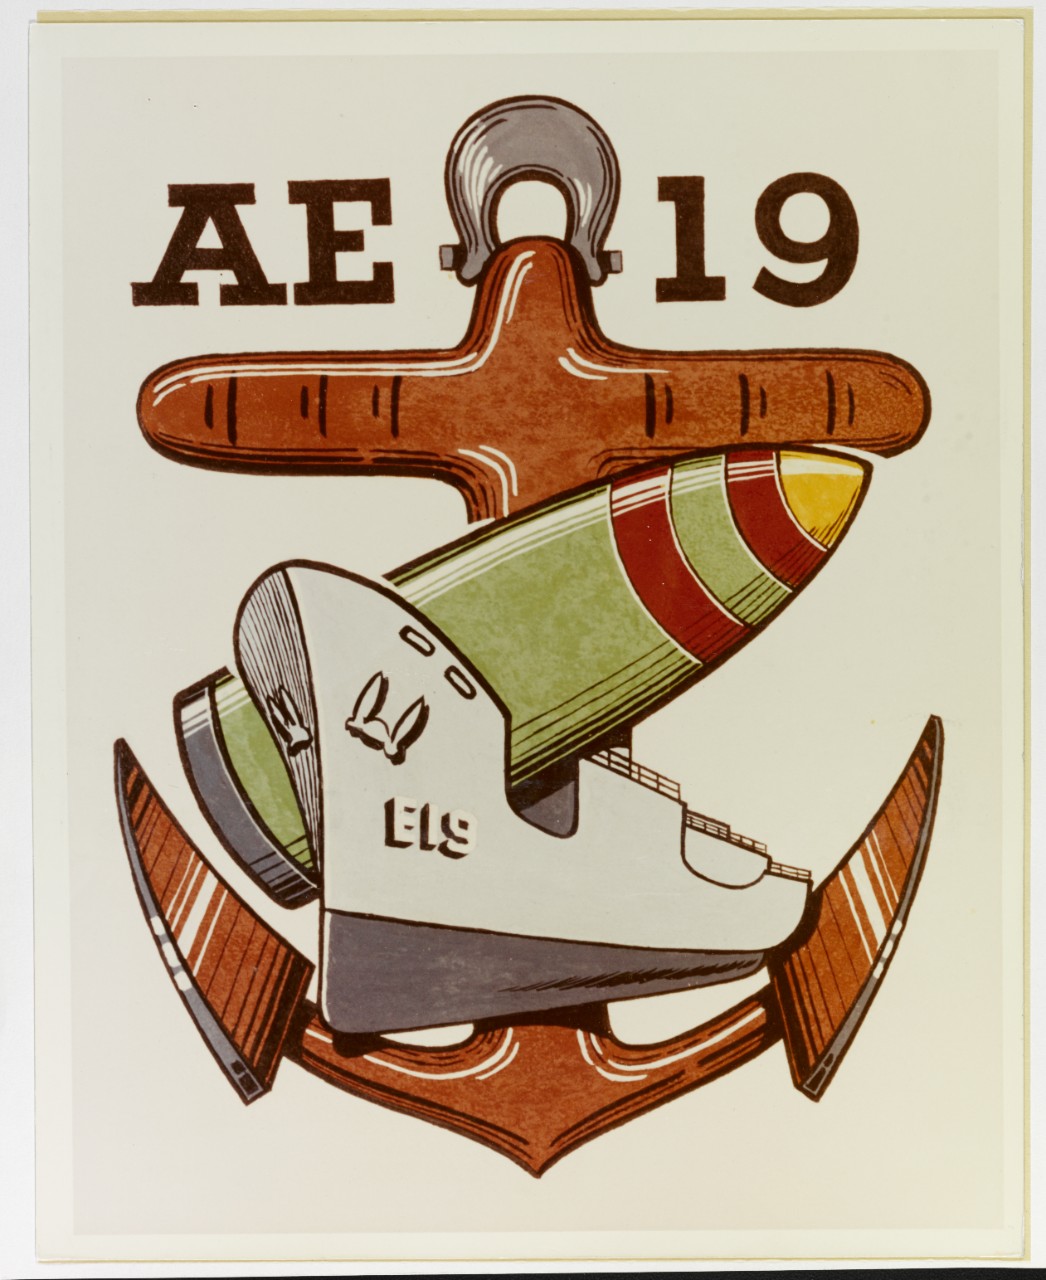 Insignia: USS DIAMOND HEAD (AE-19)